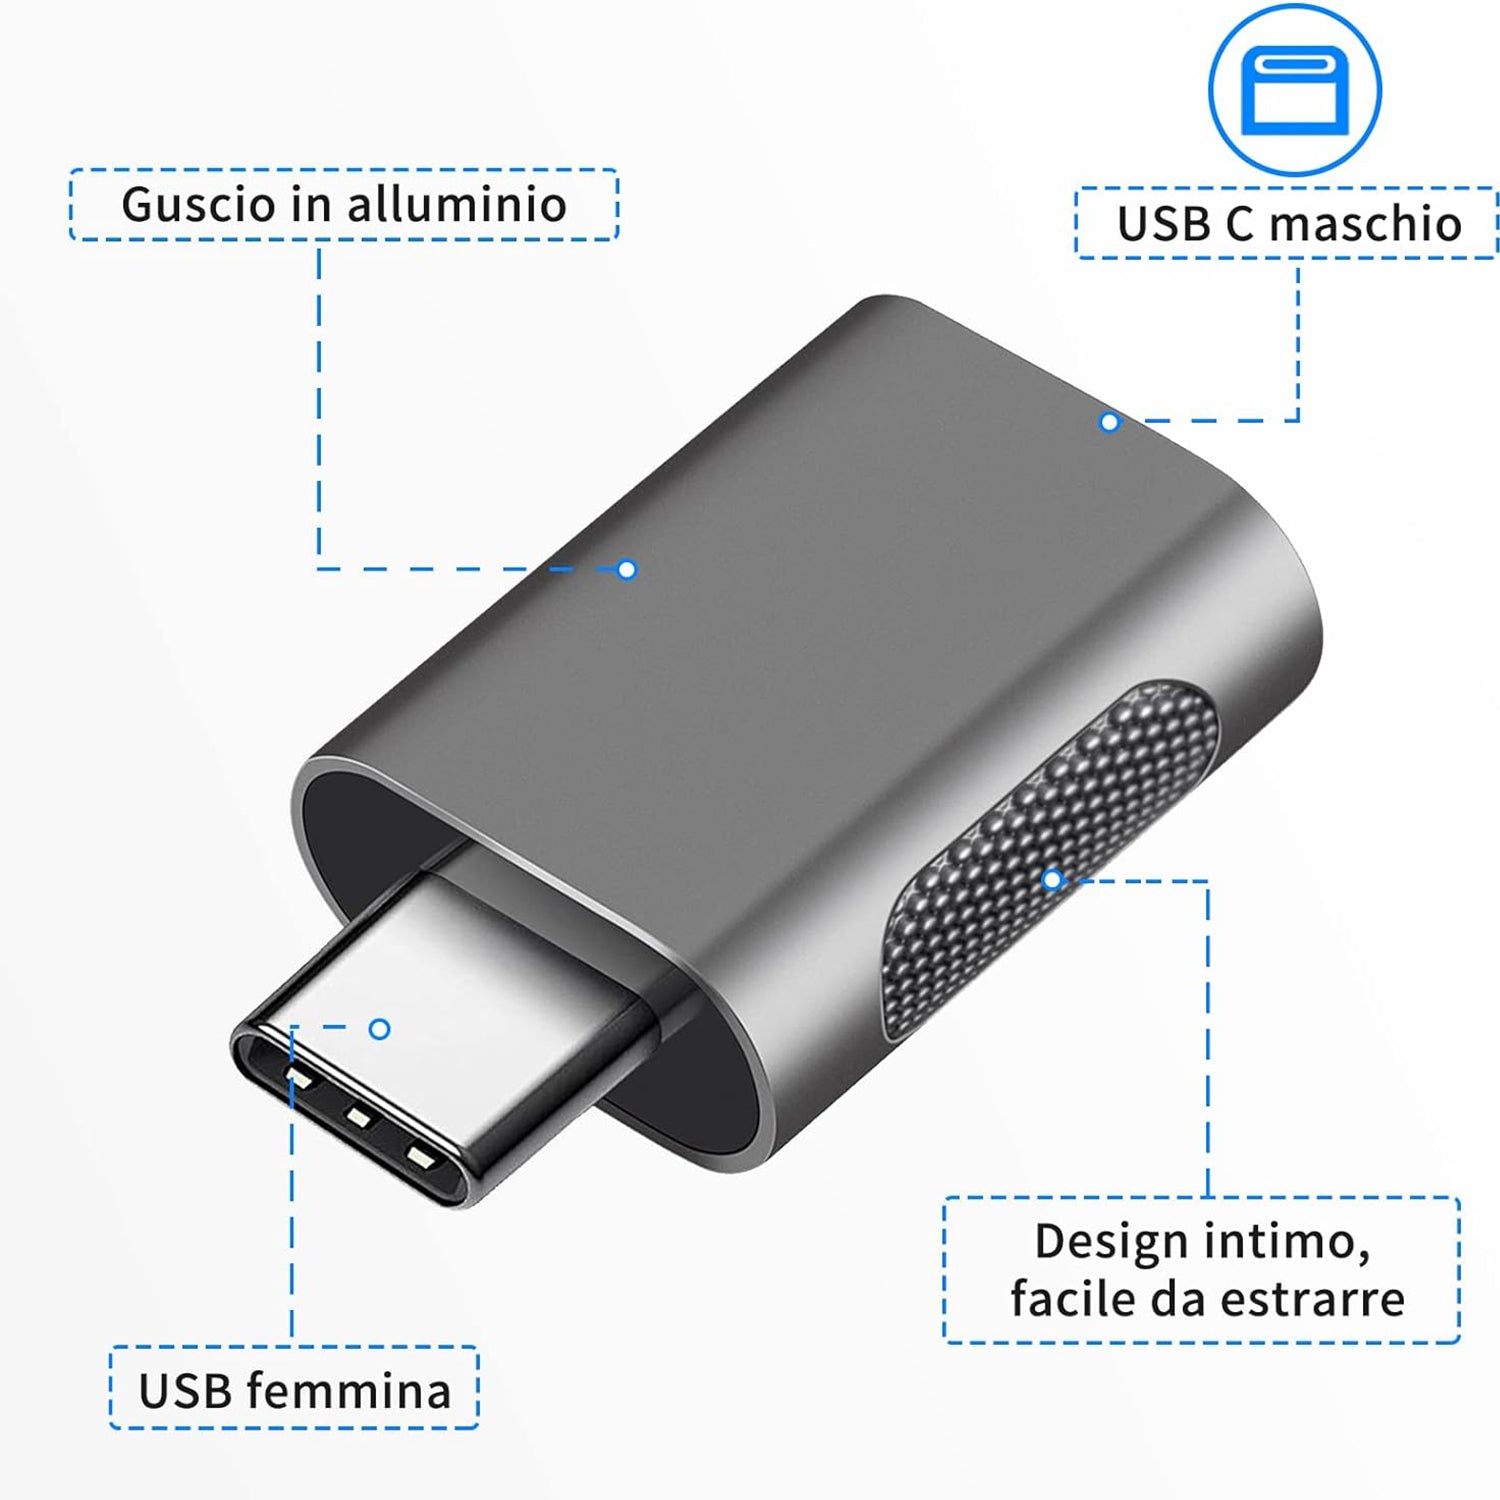 USB-C to USB 3.0 Adapter